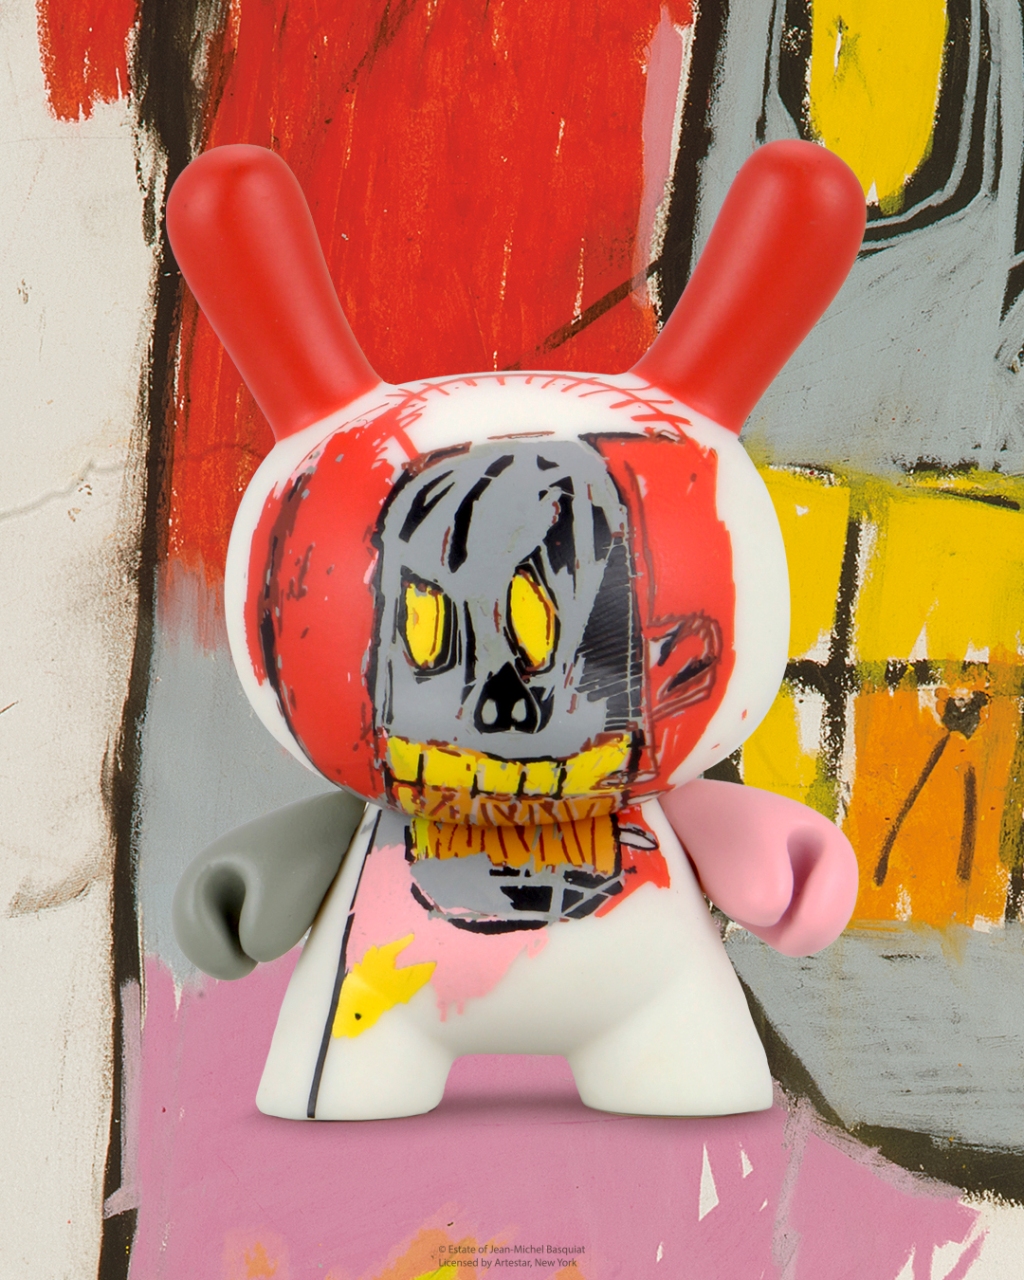 Nerd News: 2nd Series of Jean-Michel Basquiat Faces Dunnies by KidRobot